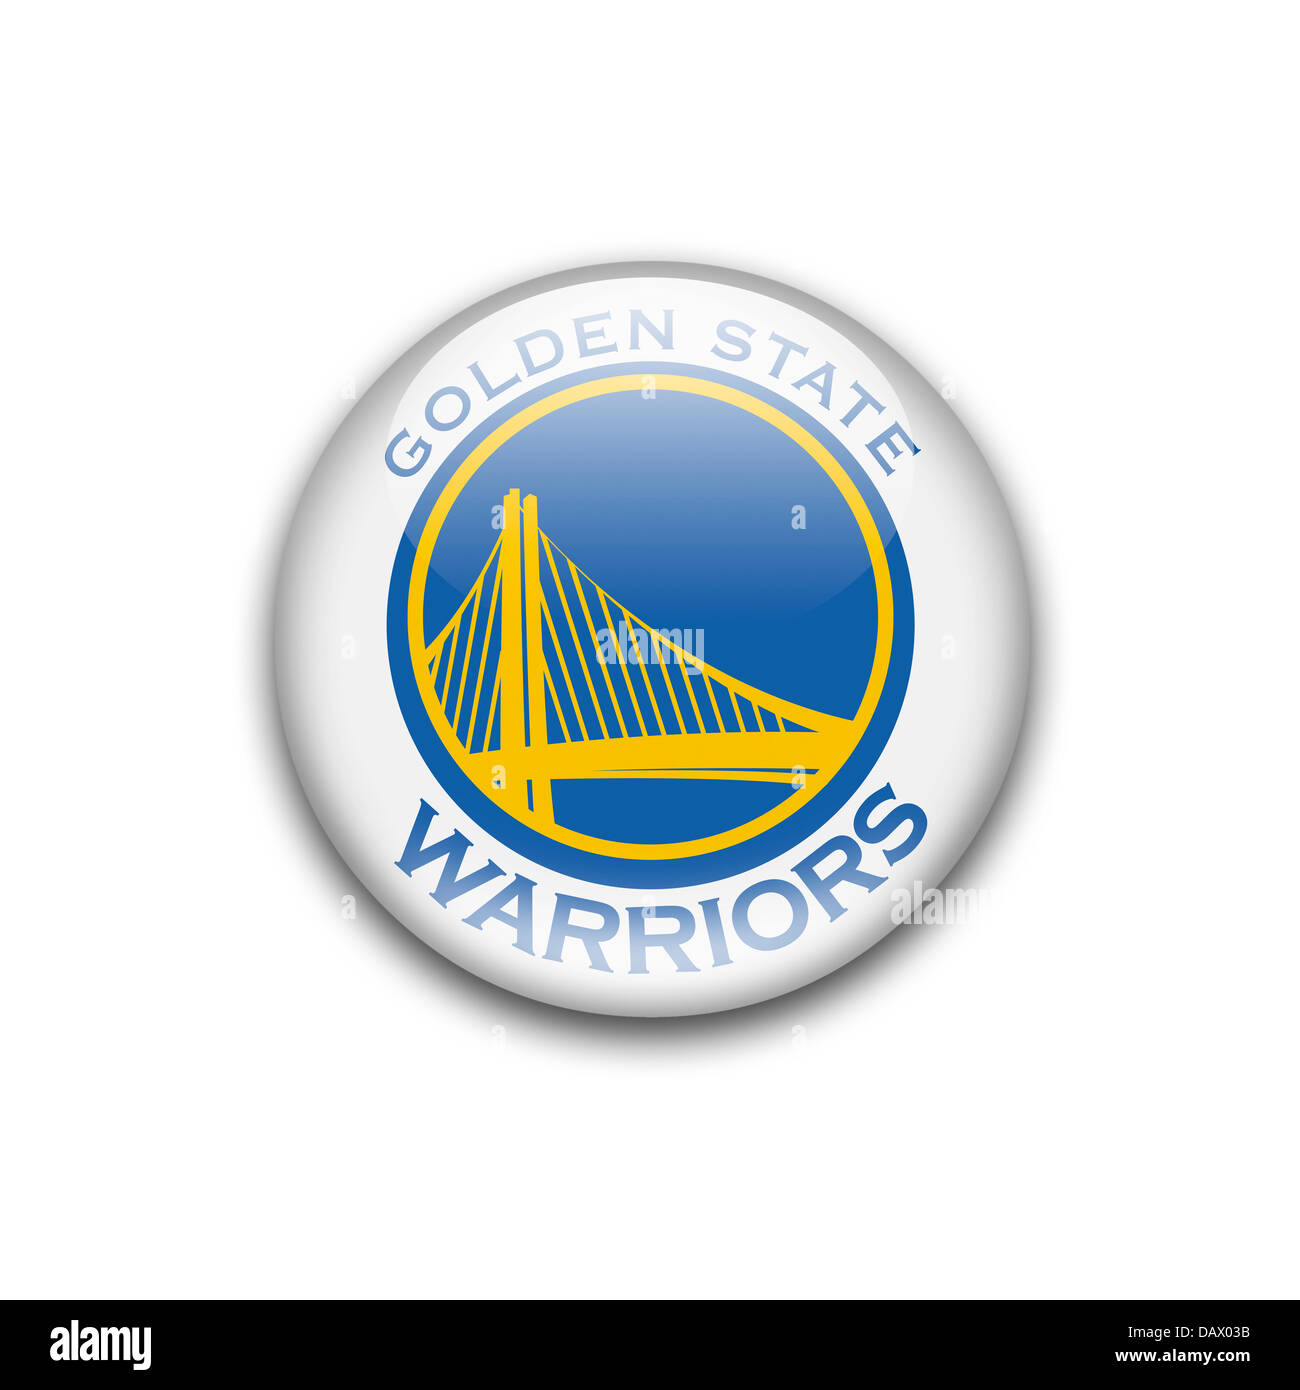 Golden State Warriors logo symbol flag icon emblem Stock Photo